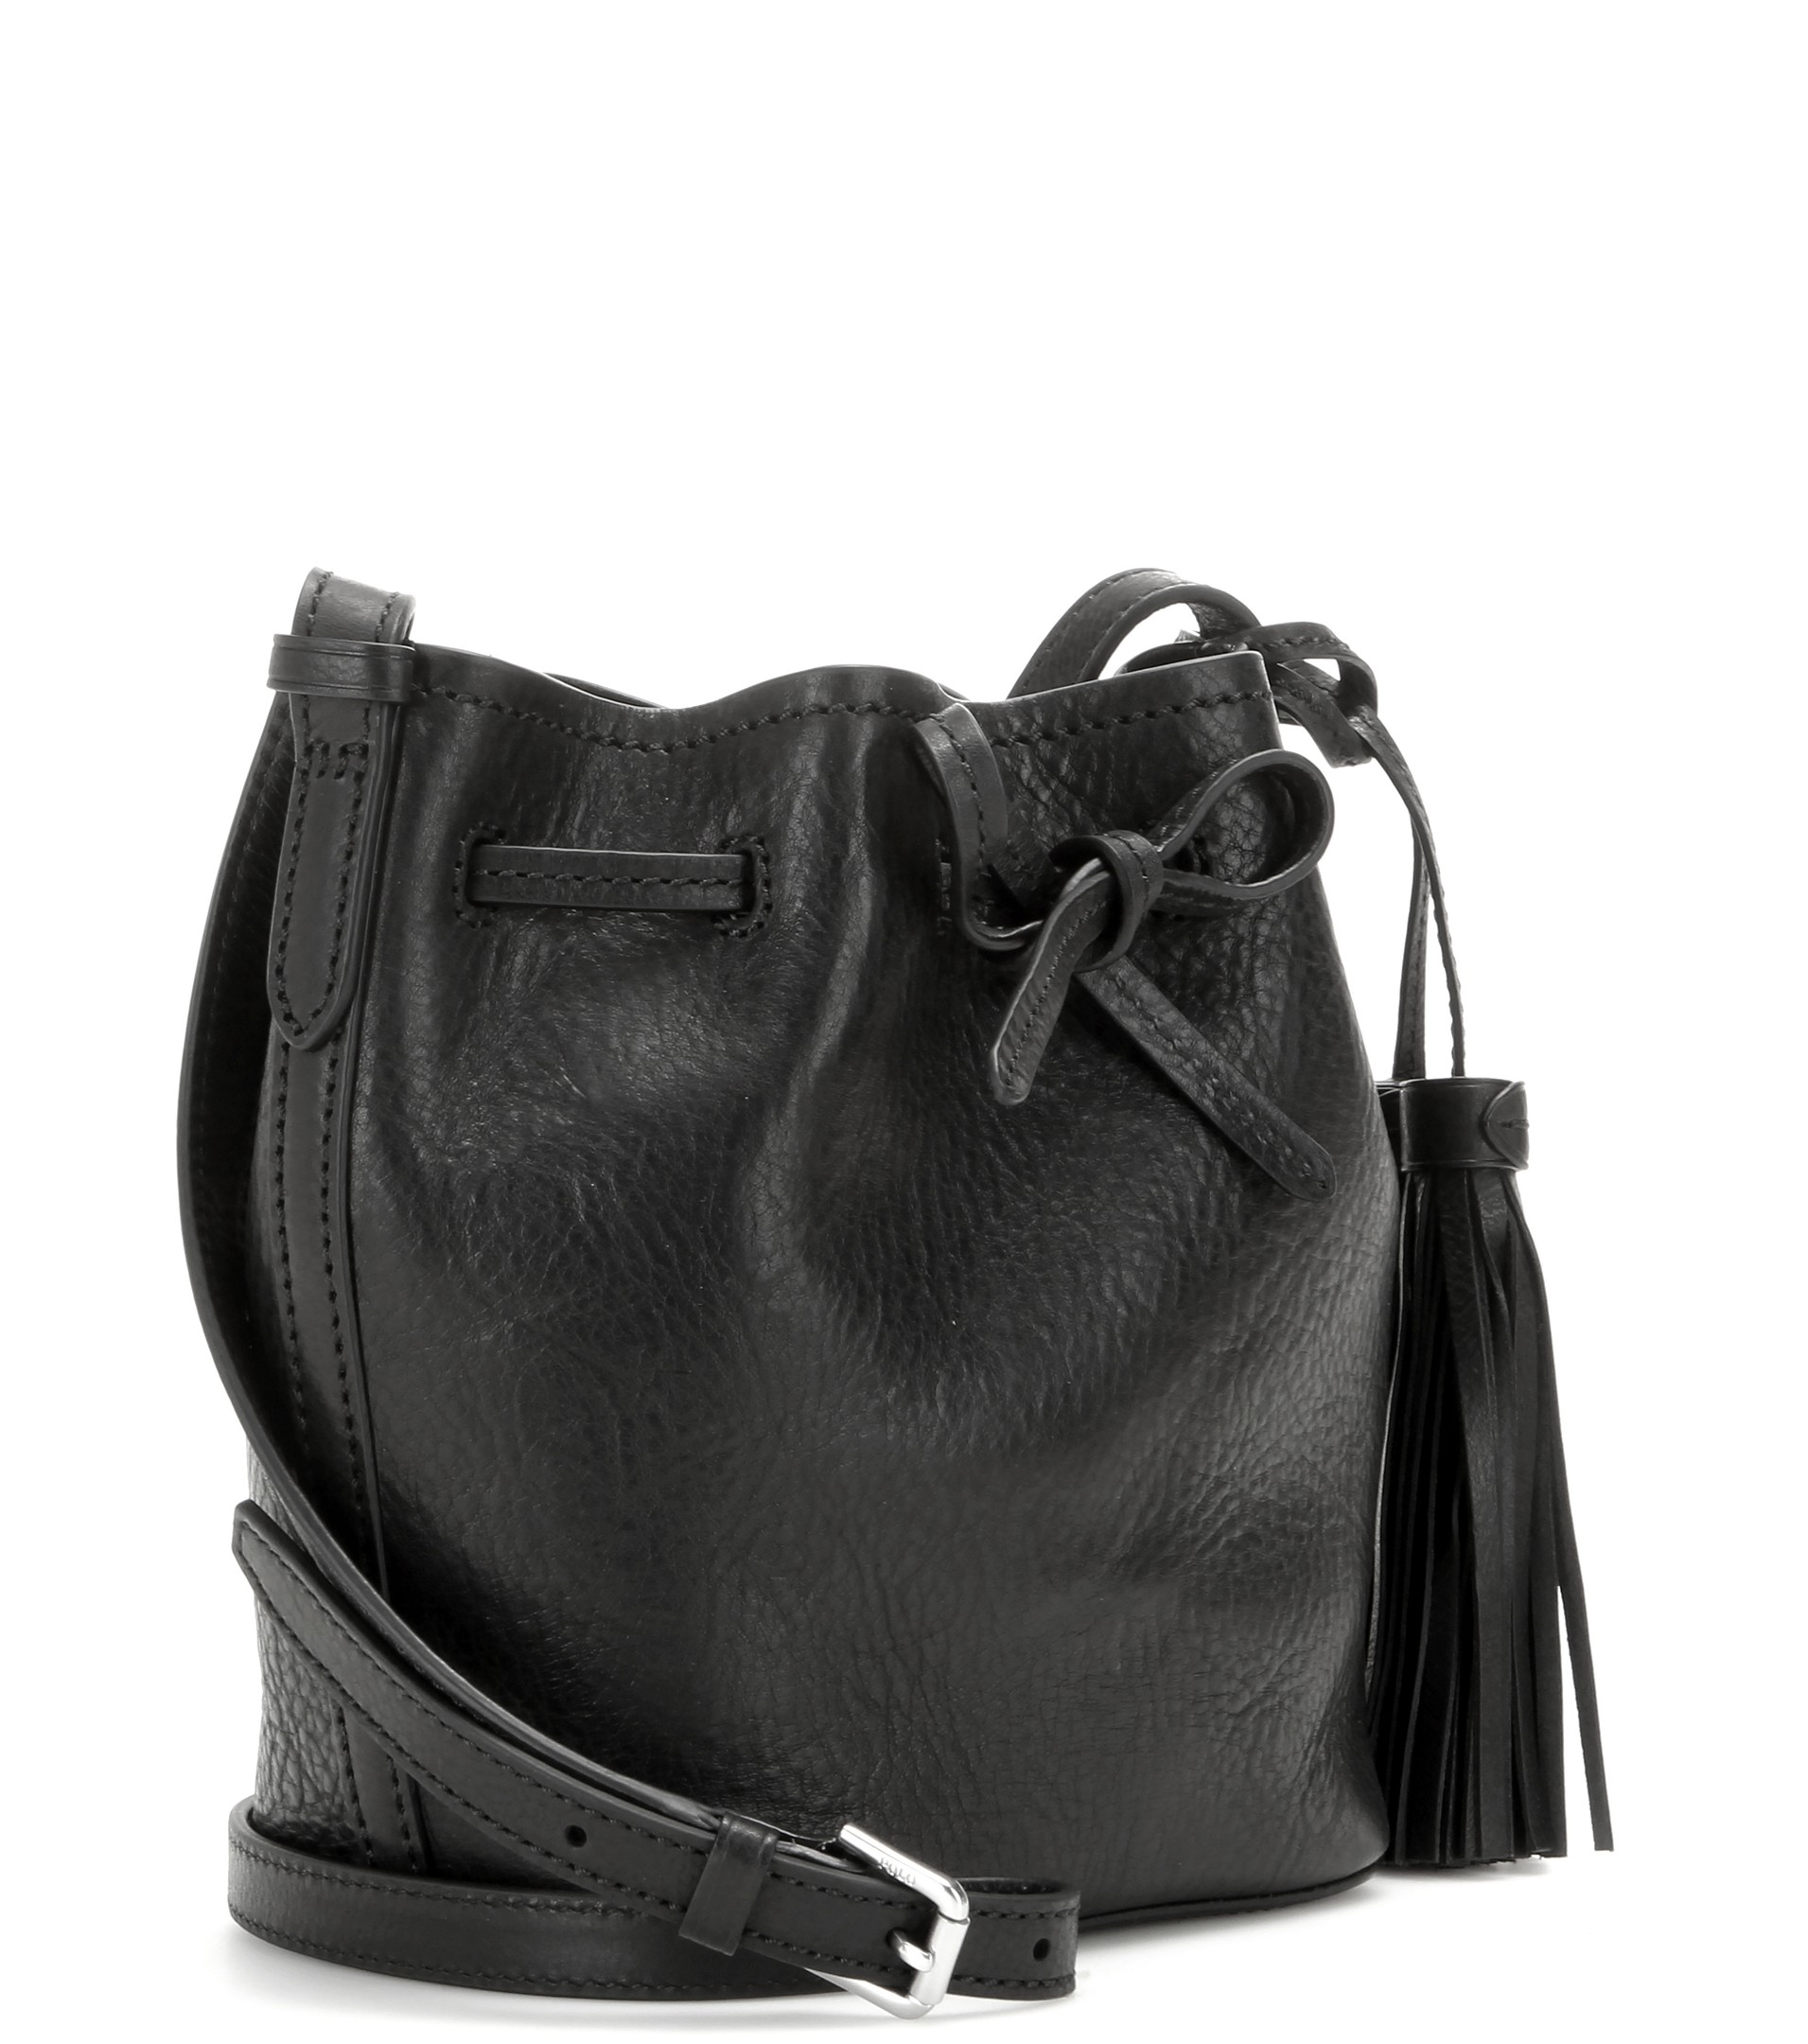 Lyst - Polo Ralph Lauren Mini Bucket Leather Shoulder Bag in Black